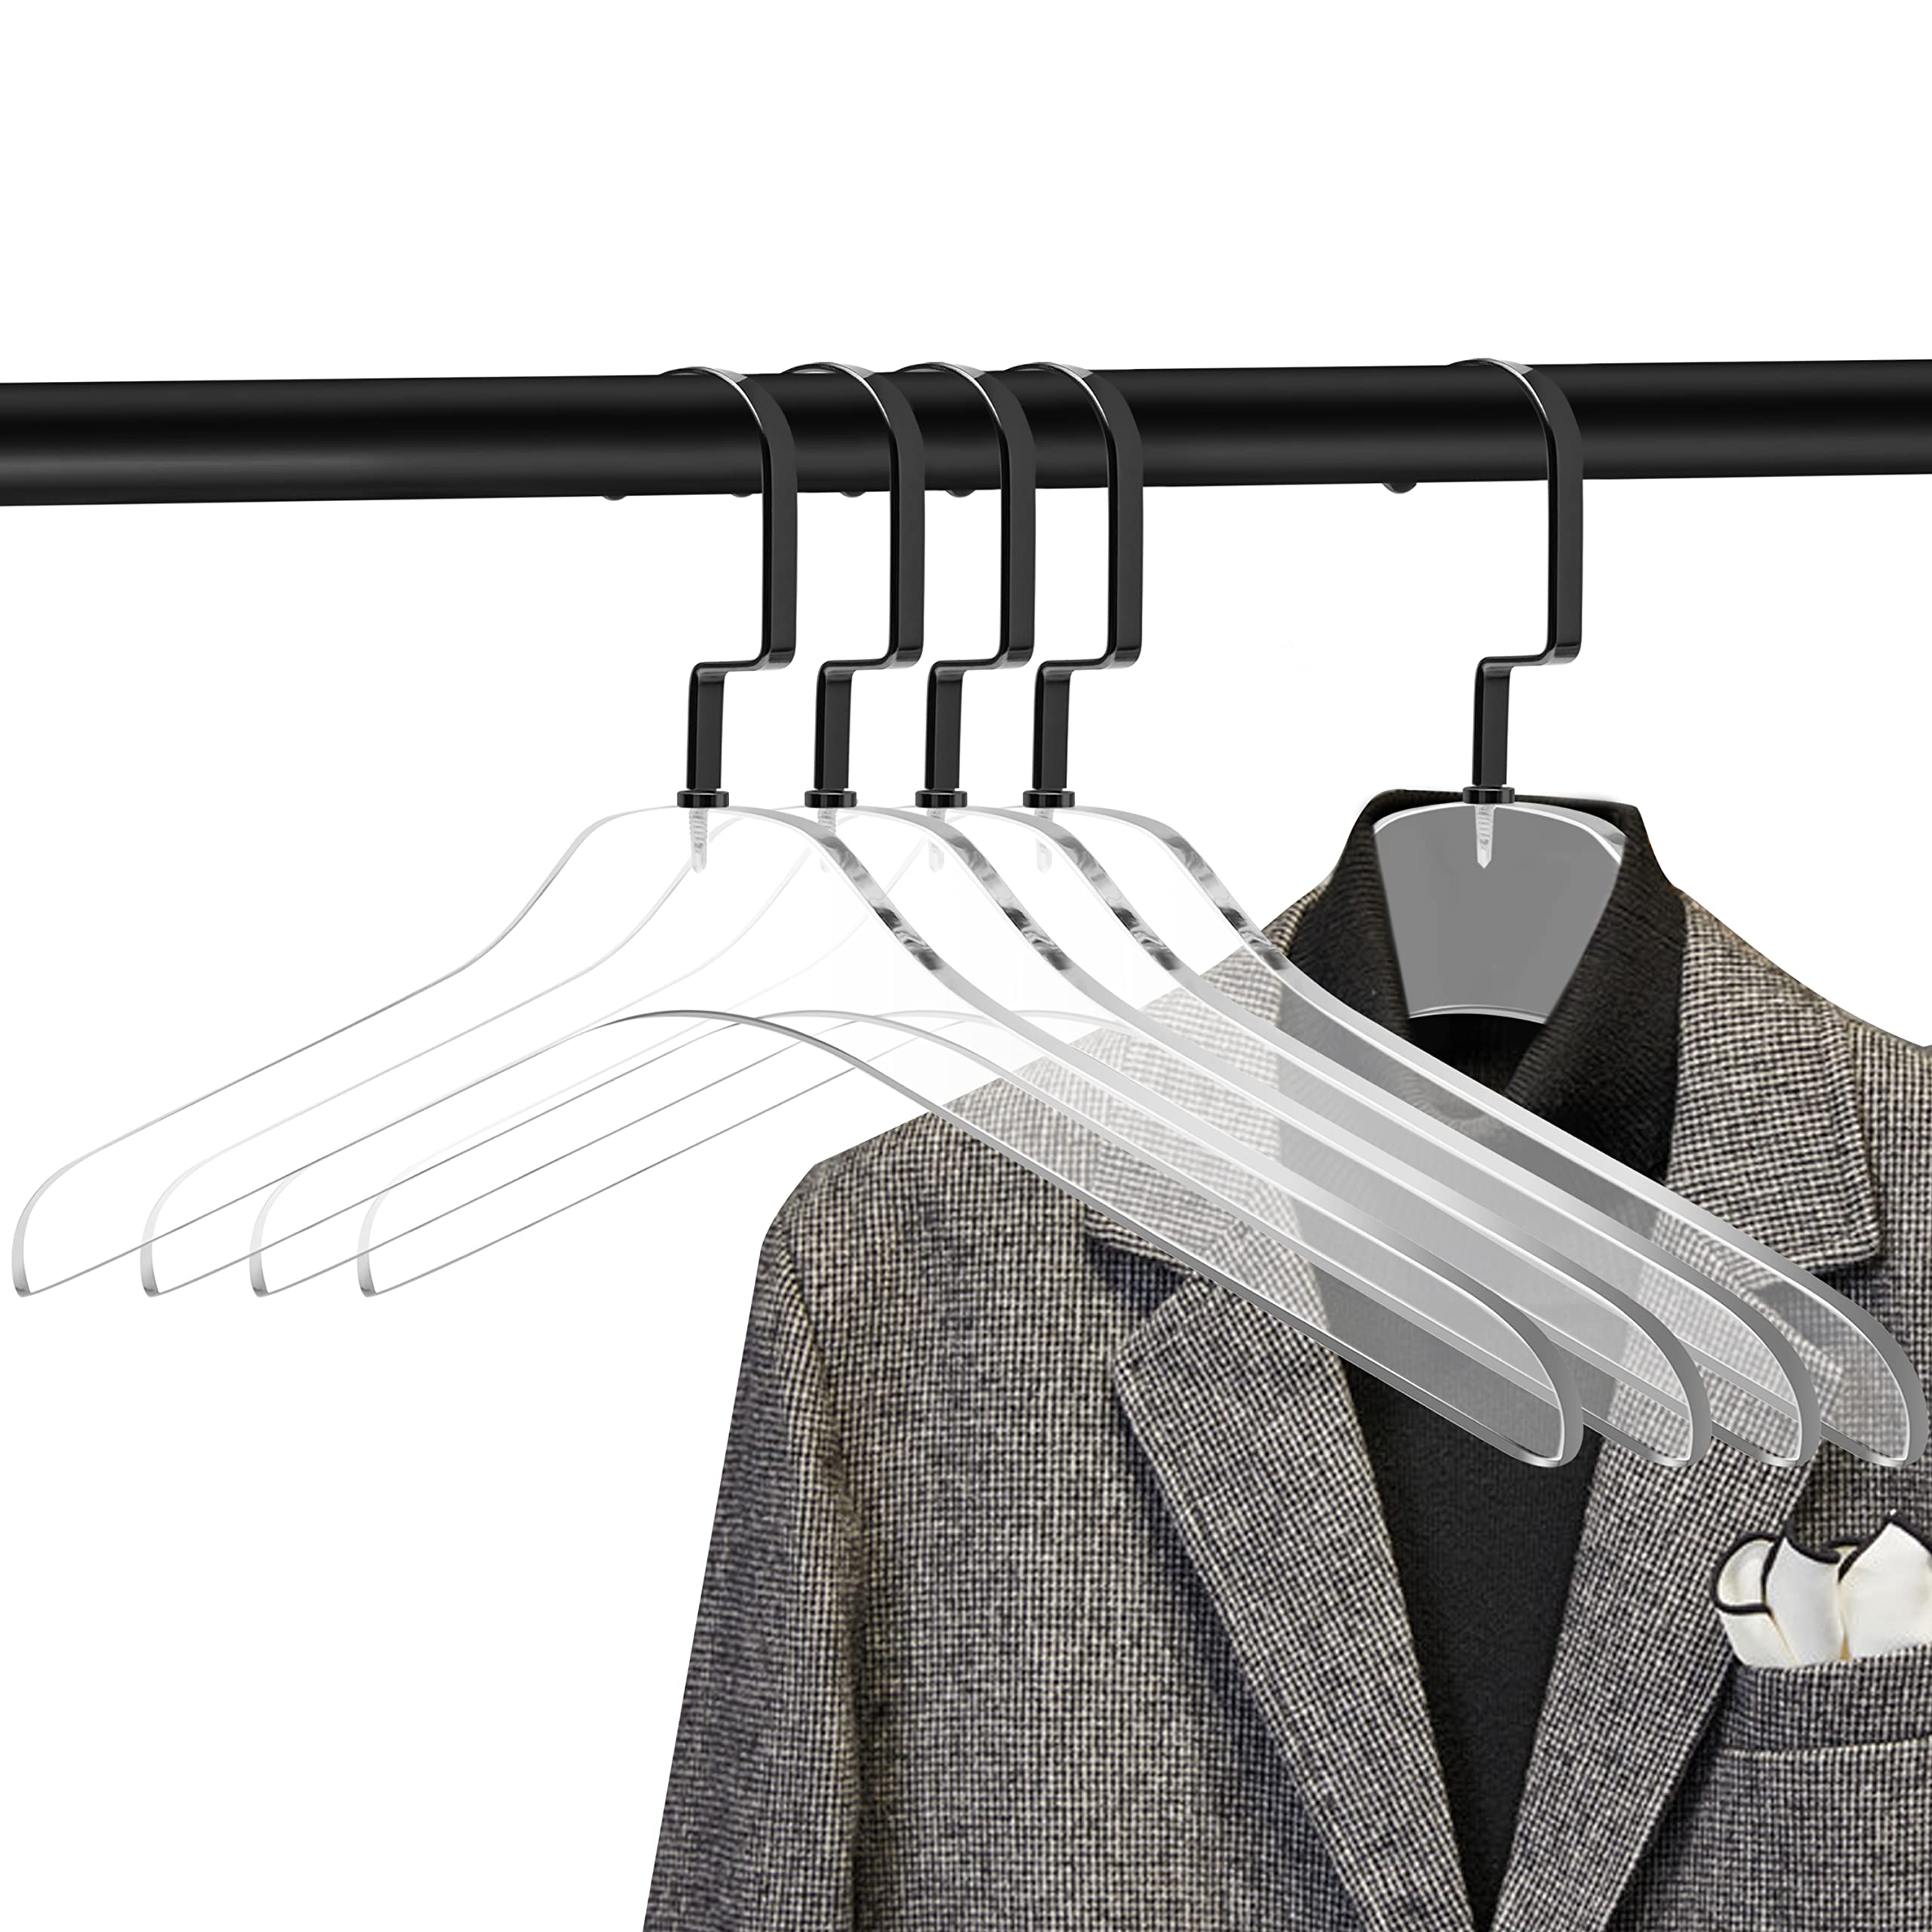 50 Quality Clear Acrylic Lucite Coat Suit Hangers, Stylish Clothes Hanger with Silver Hook - Coat Hanger for Dress, Suit - Closet Organizer Adult Hangers (Matte Silver, 50)  - Acceptable